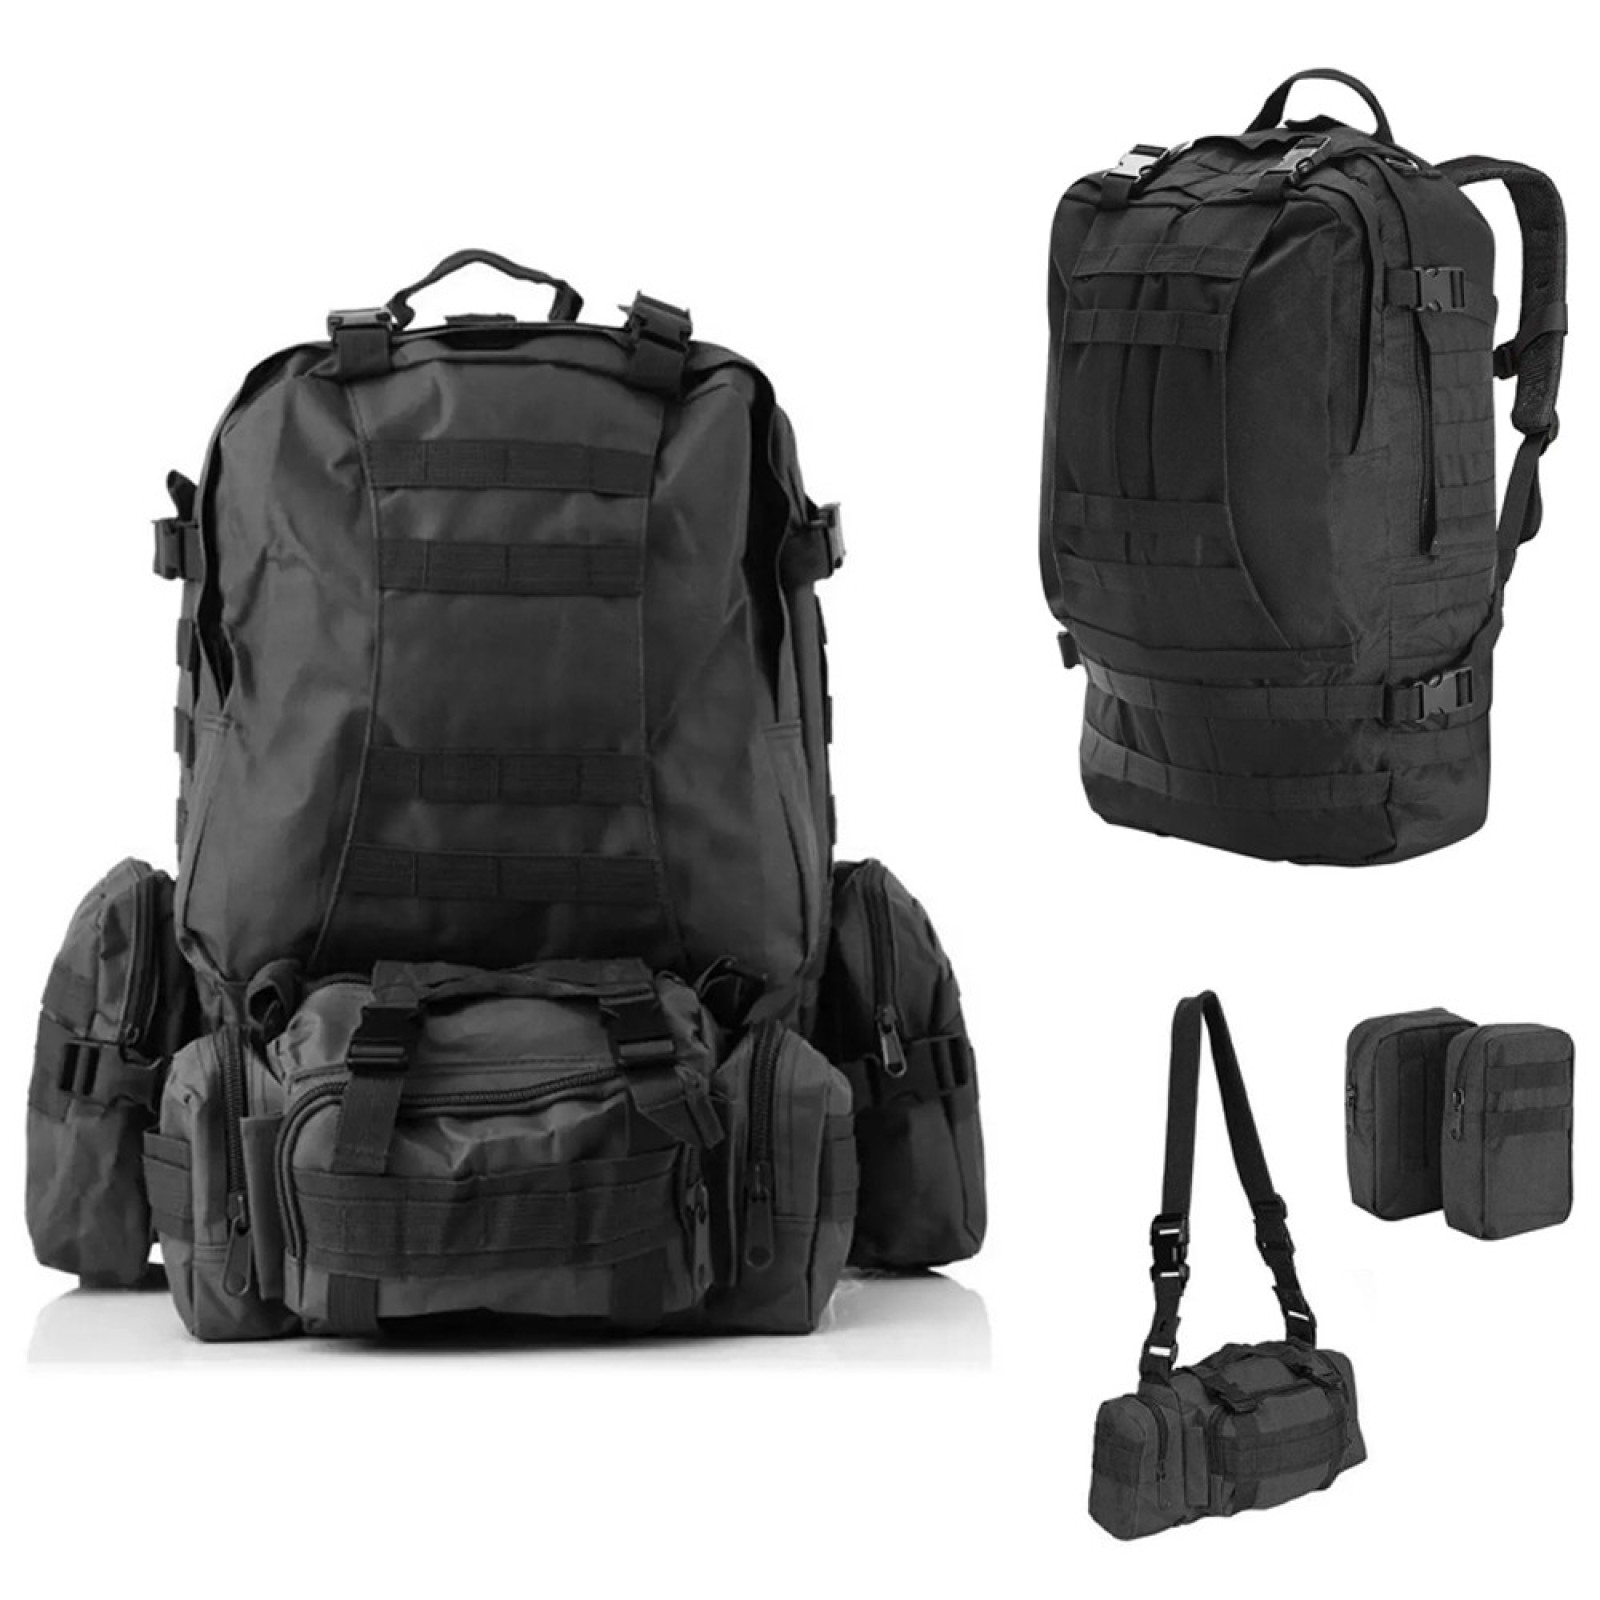 Рюкзак Тактический с подсумками B08 Black 55L 204254